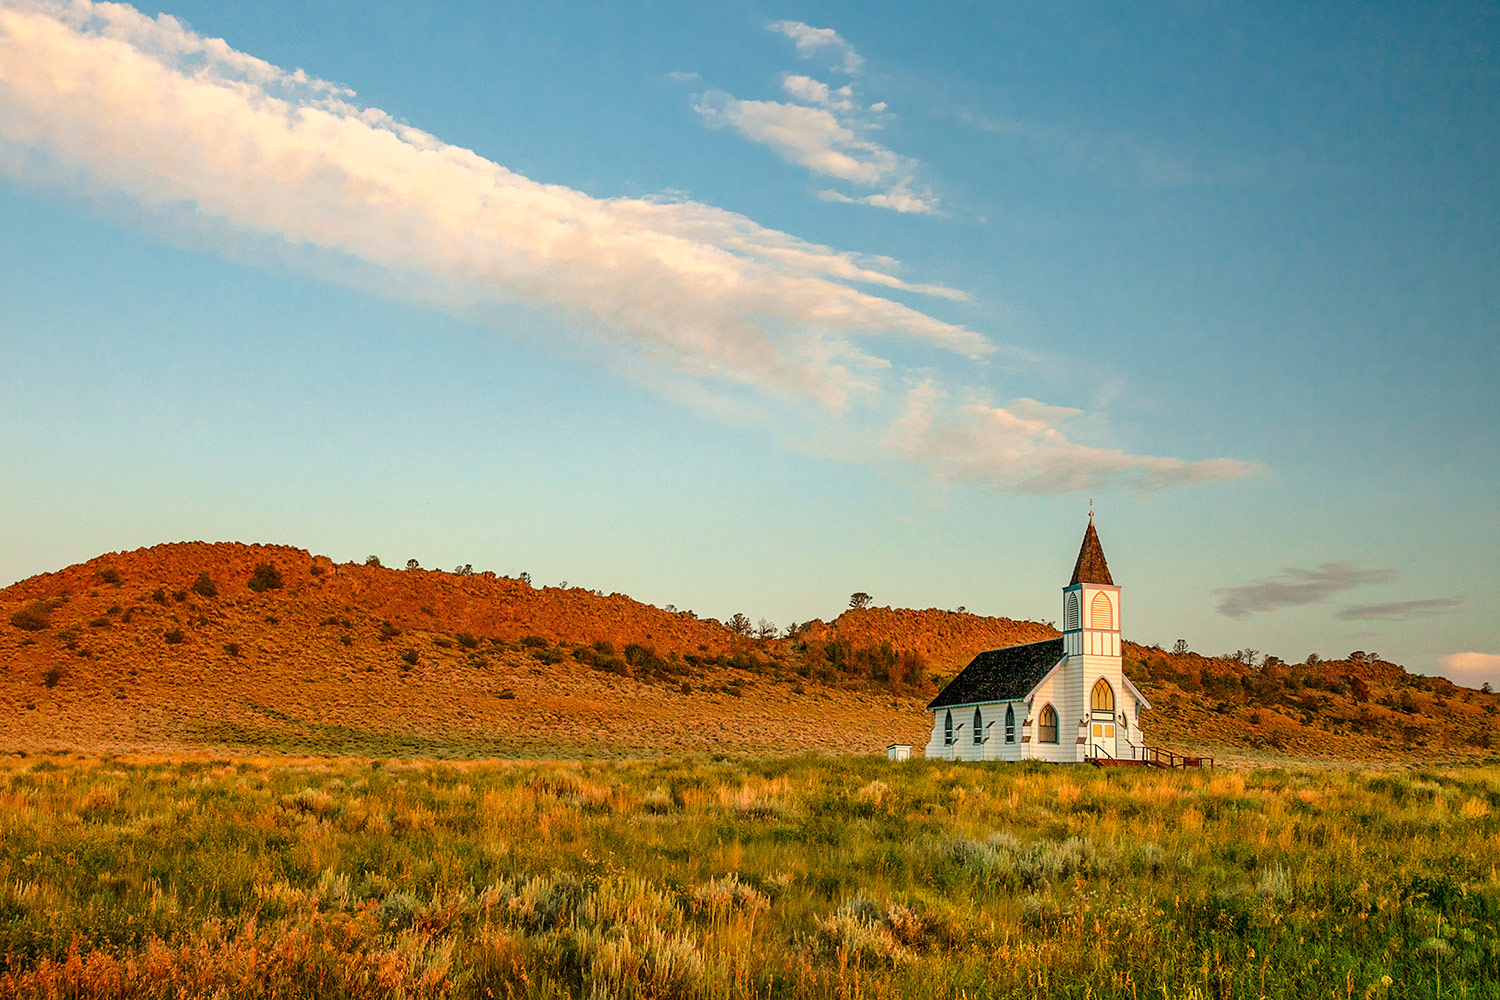 Photos of country churches